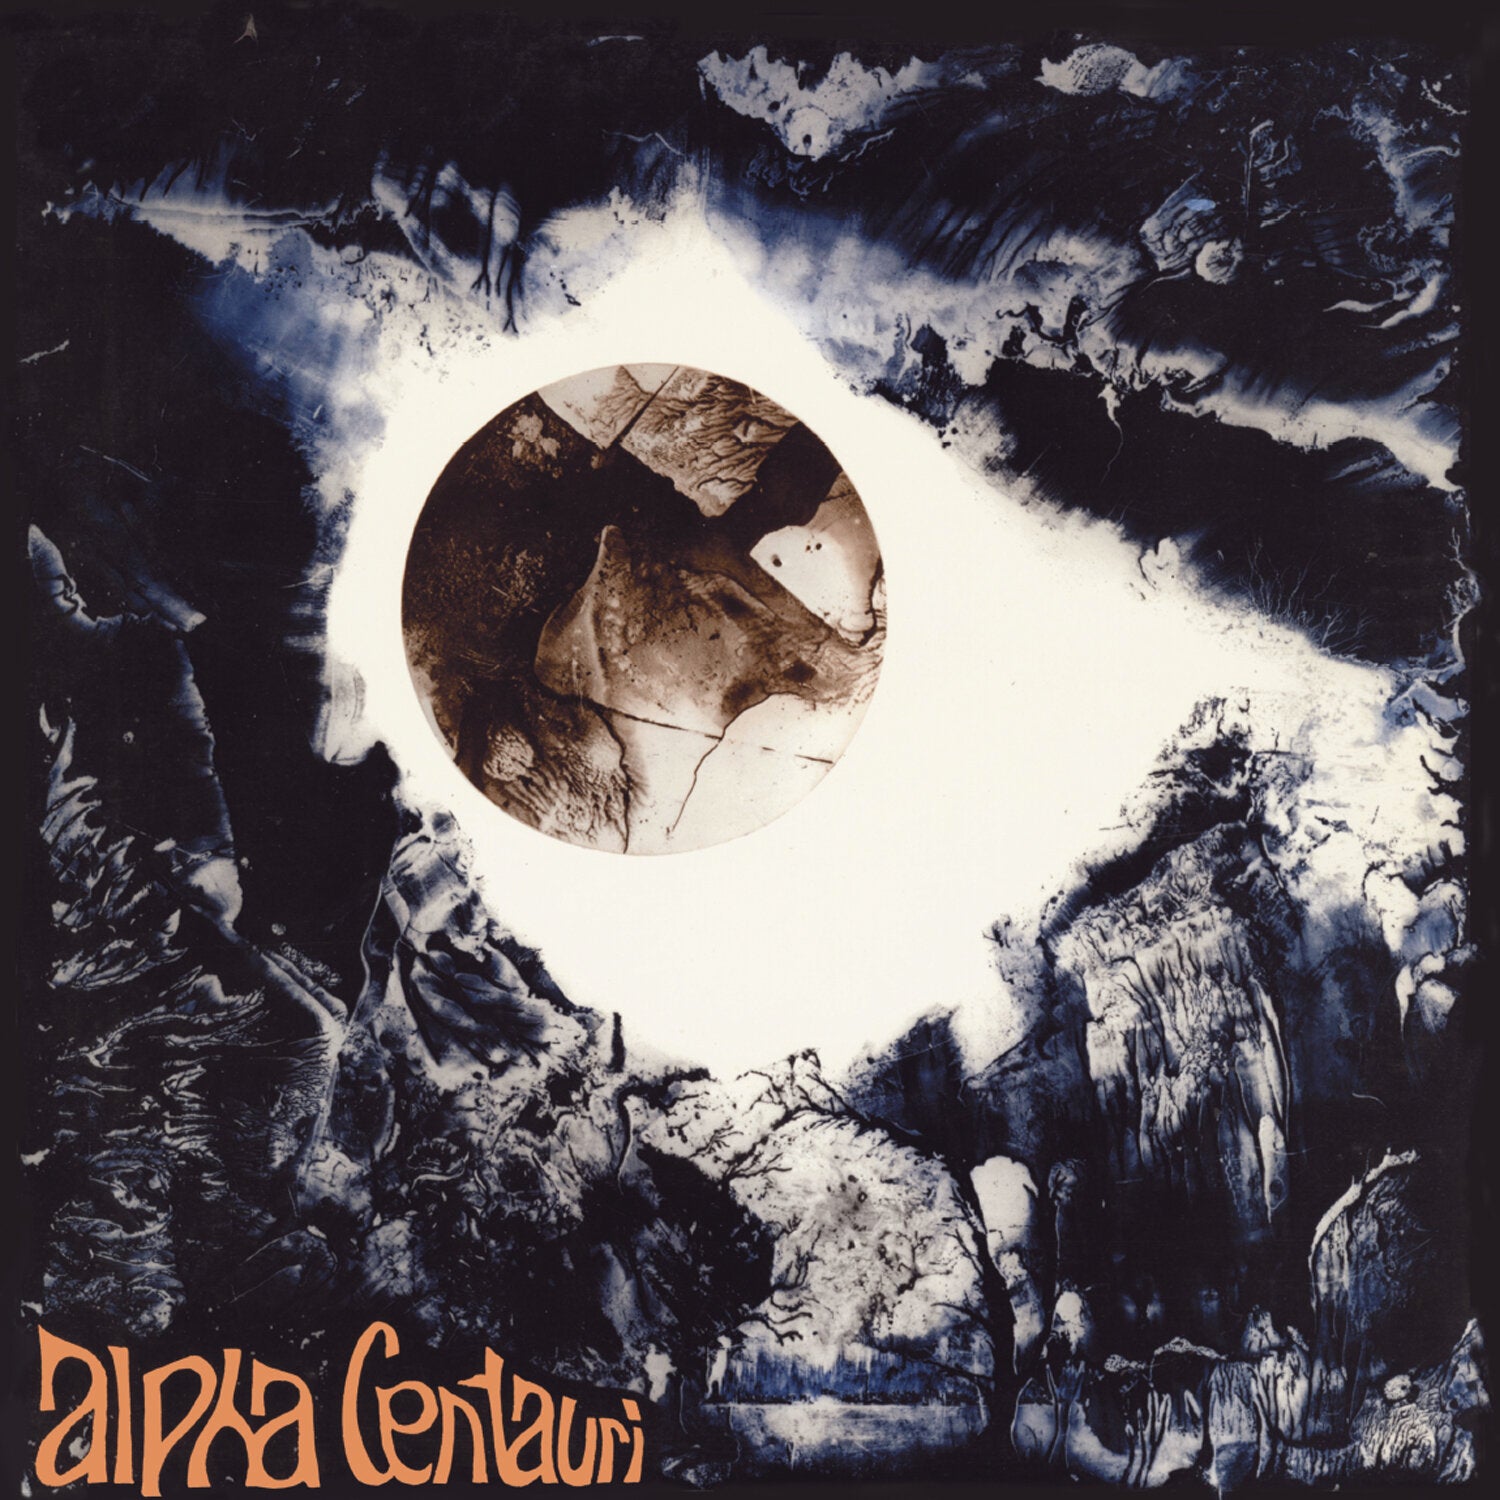 Tangerine Dream "Alpha Centauri + Ultima Thule" [LP + 12" Clear Vinyl]